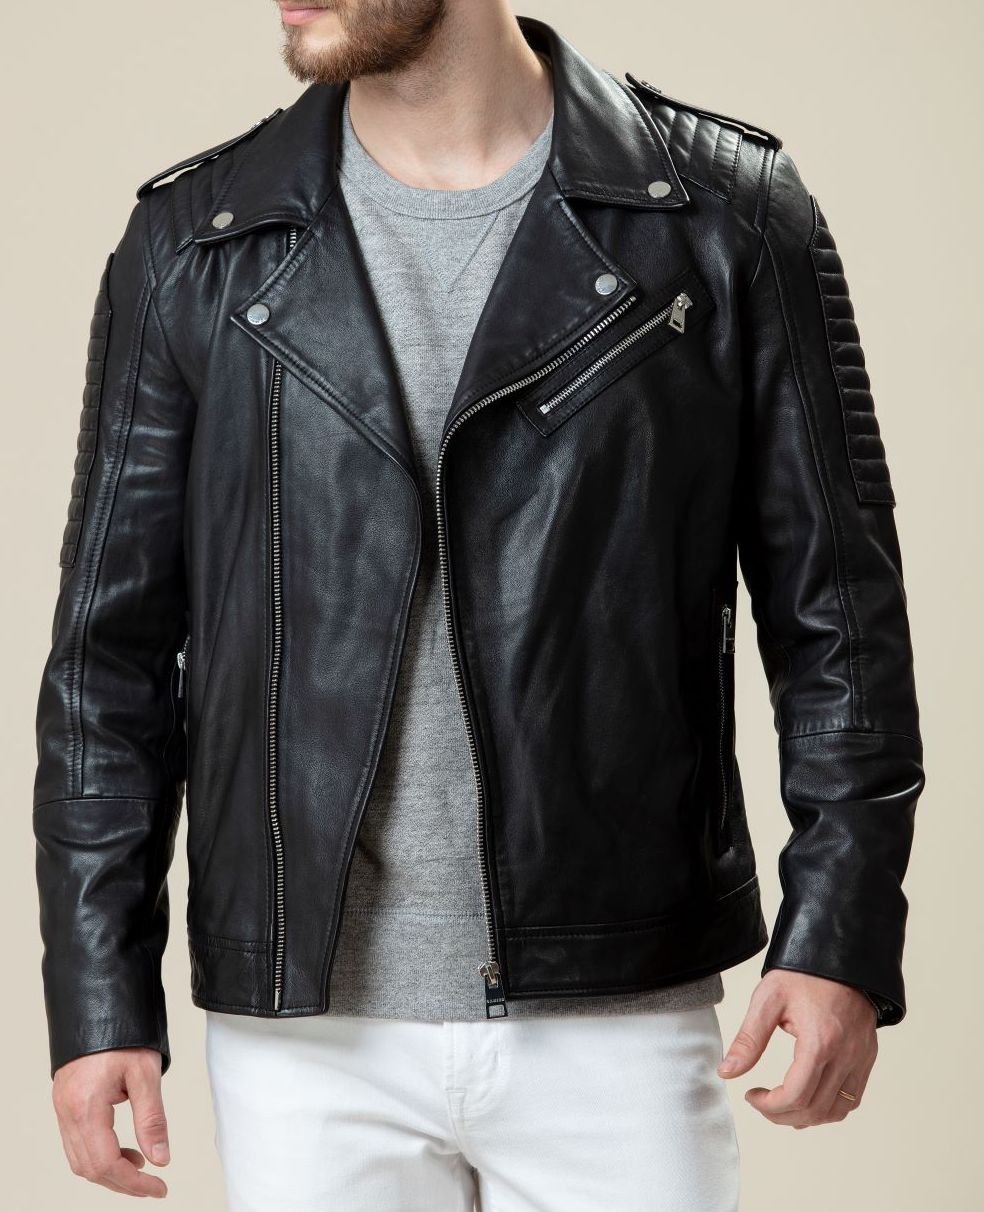 Terminate Closer Brando Black Jacket | Men's Leather Jacket